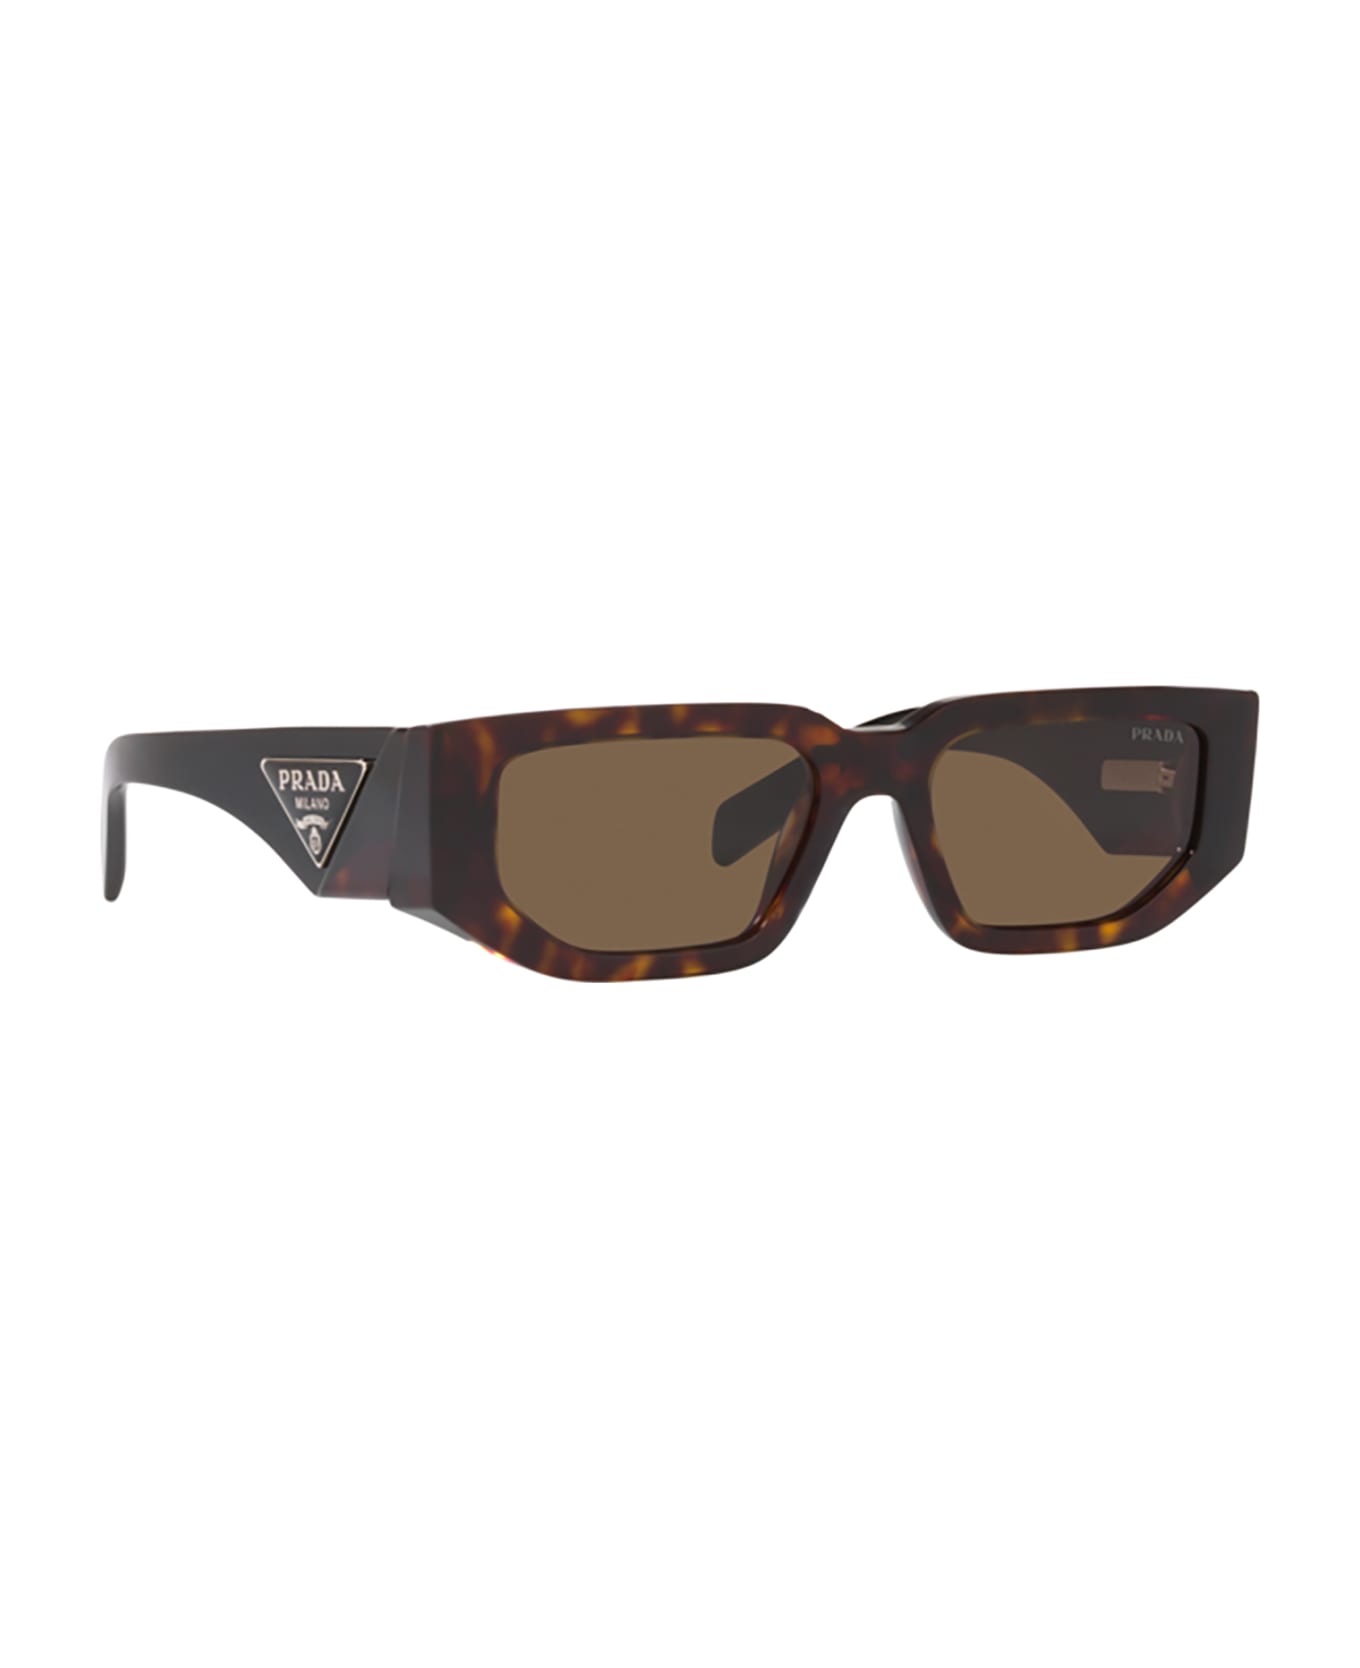 Prada Eyewear Pr 09zs Tortoise Sunglasses - Tortoise